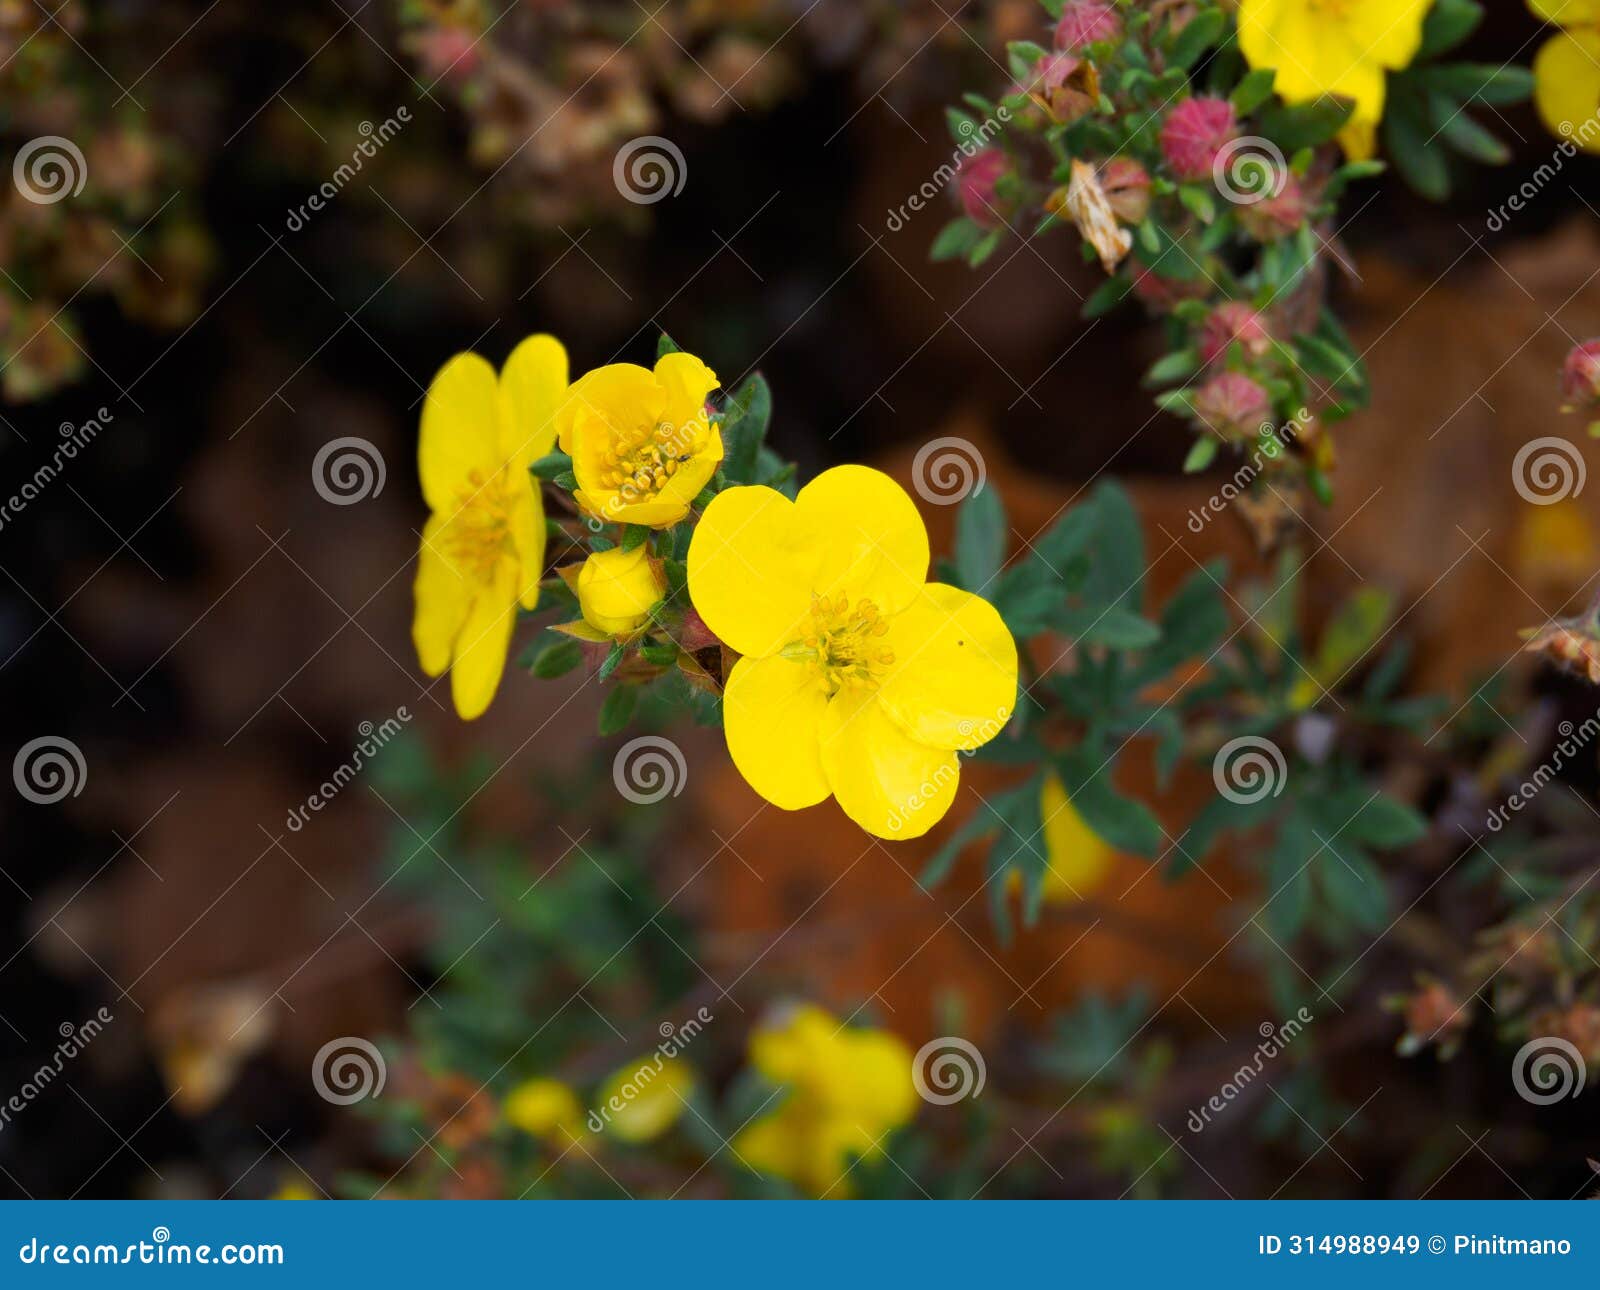 close up bright yellow flowers of dasiphora fruticosa 'goldfinger' in garden.